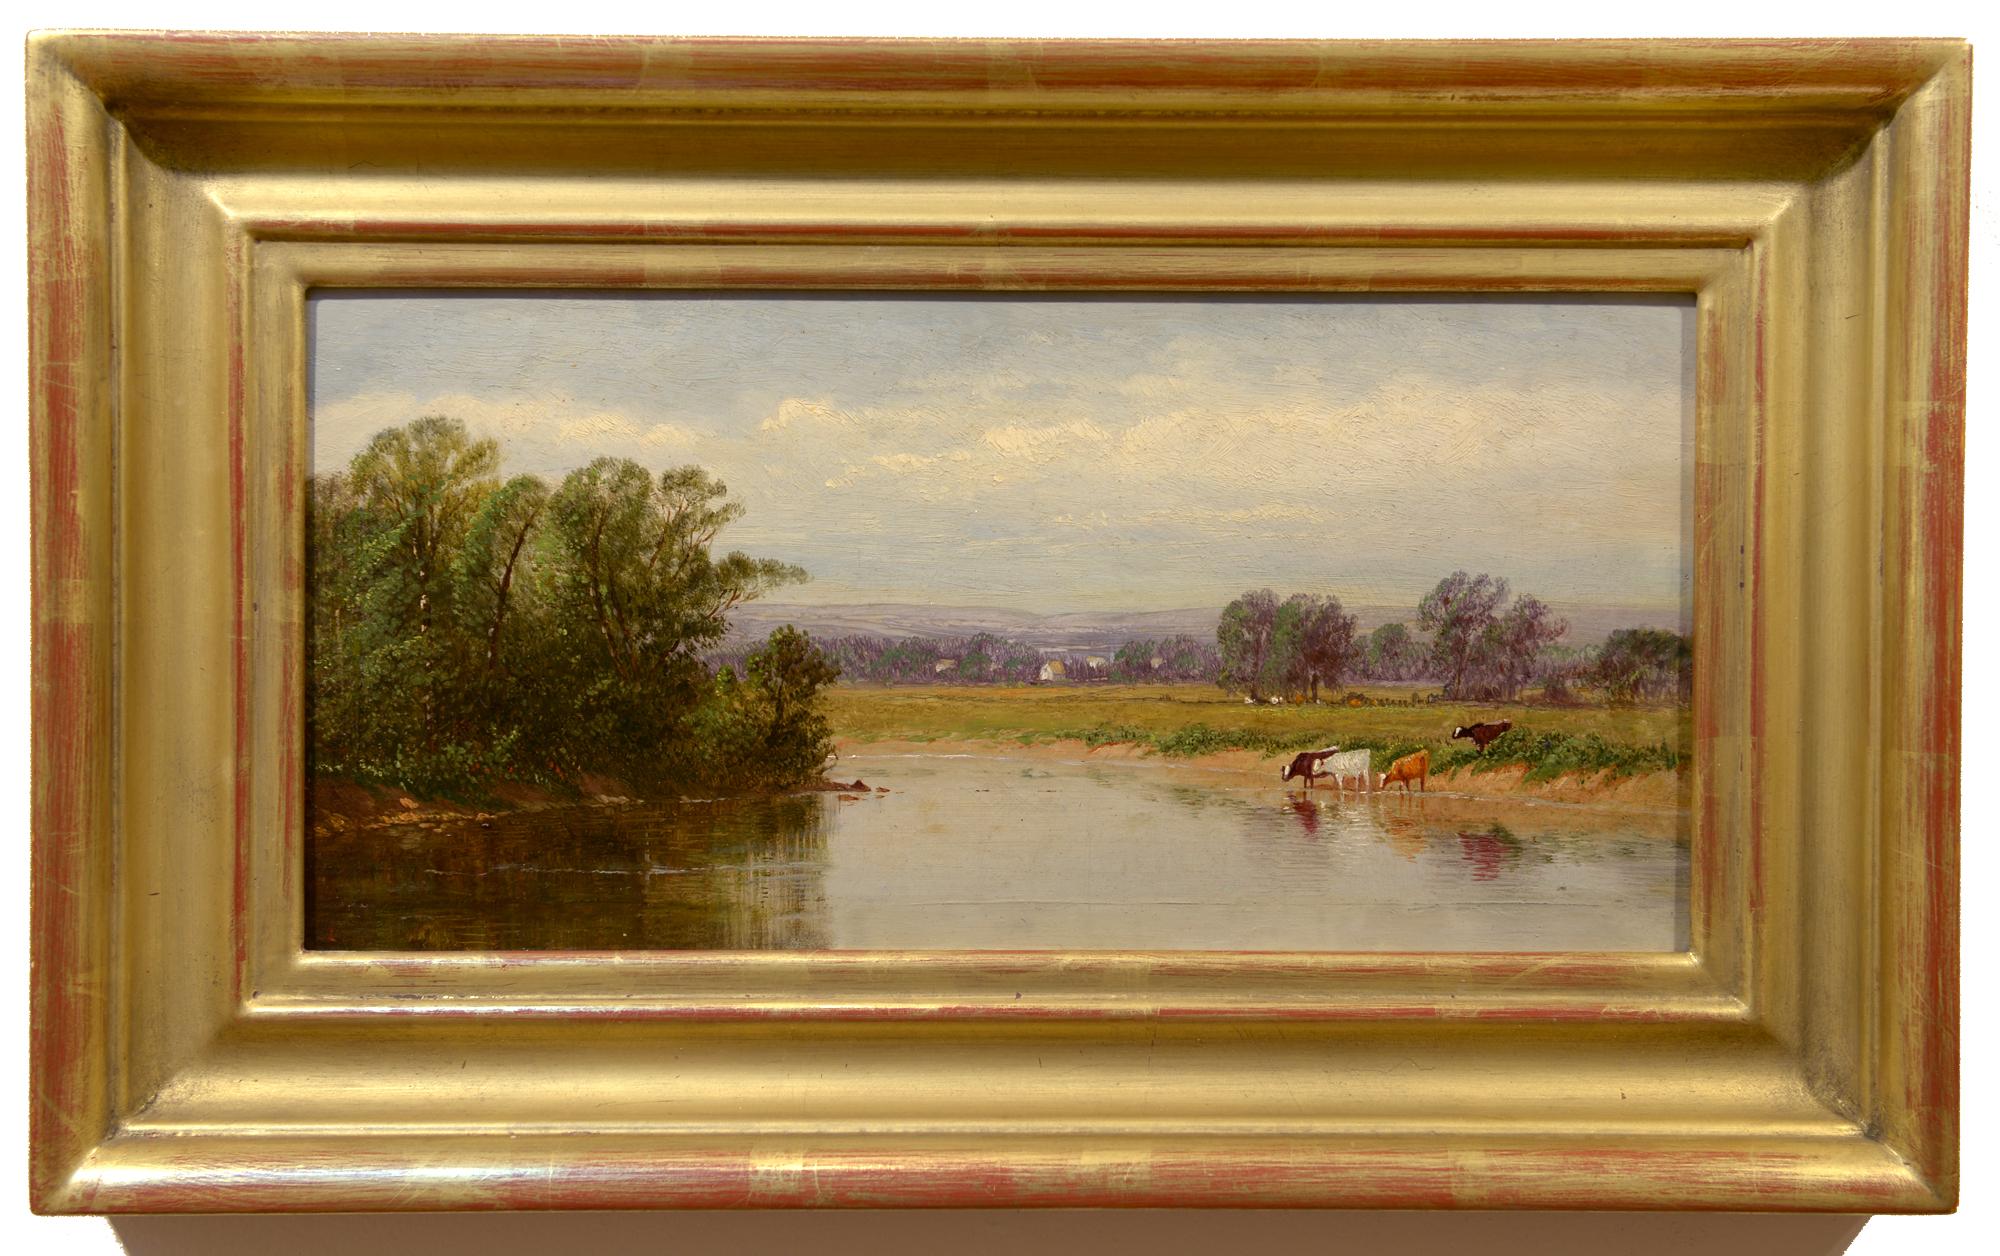 Along the River, Cattle Grazing, American Realist, Oil on Board, Landscape - Painting by Clinton Loveridge